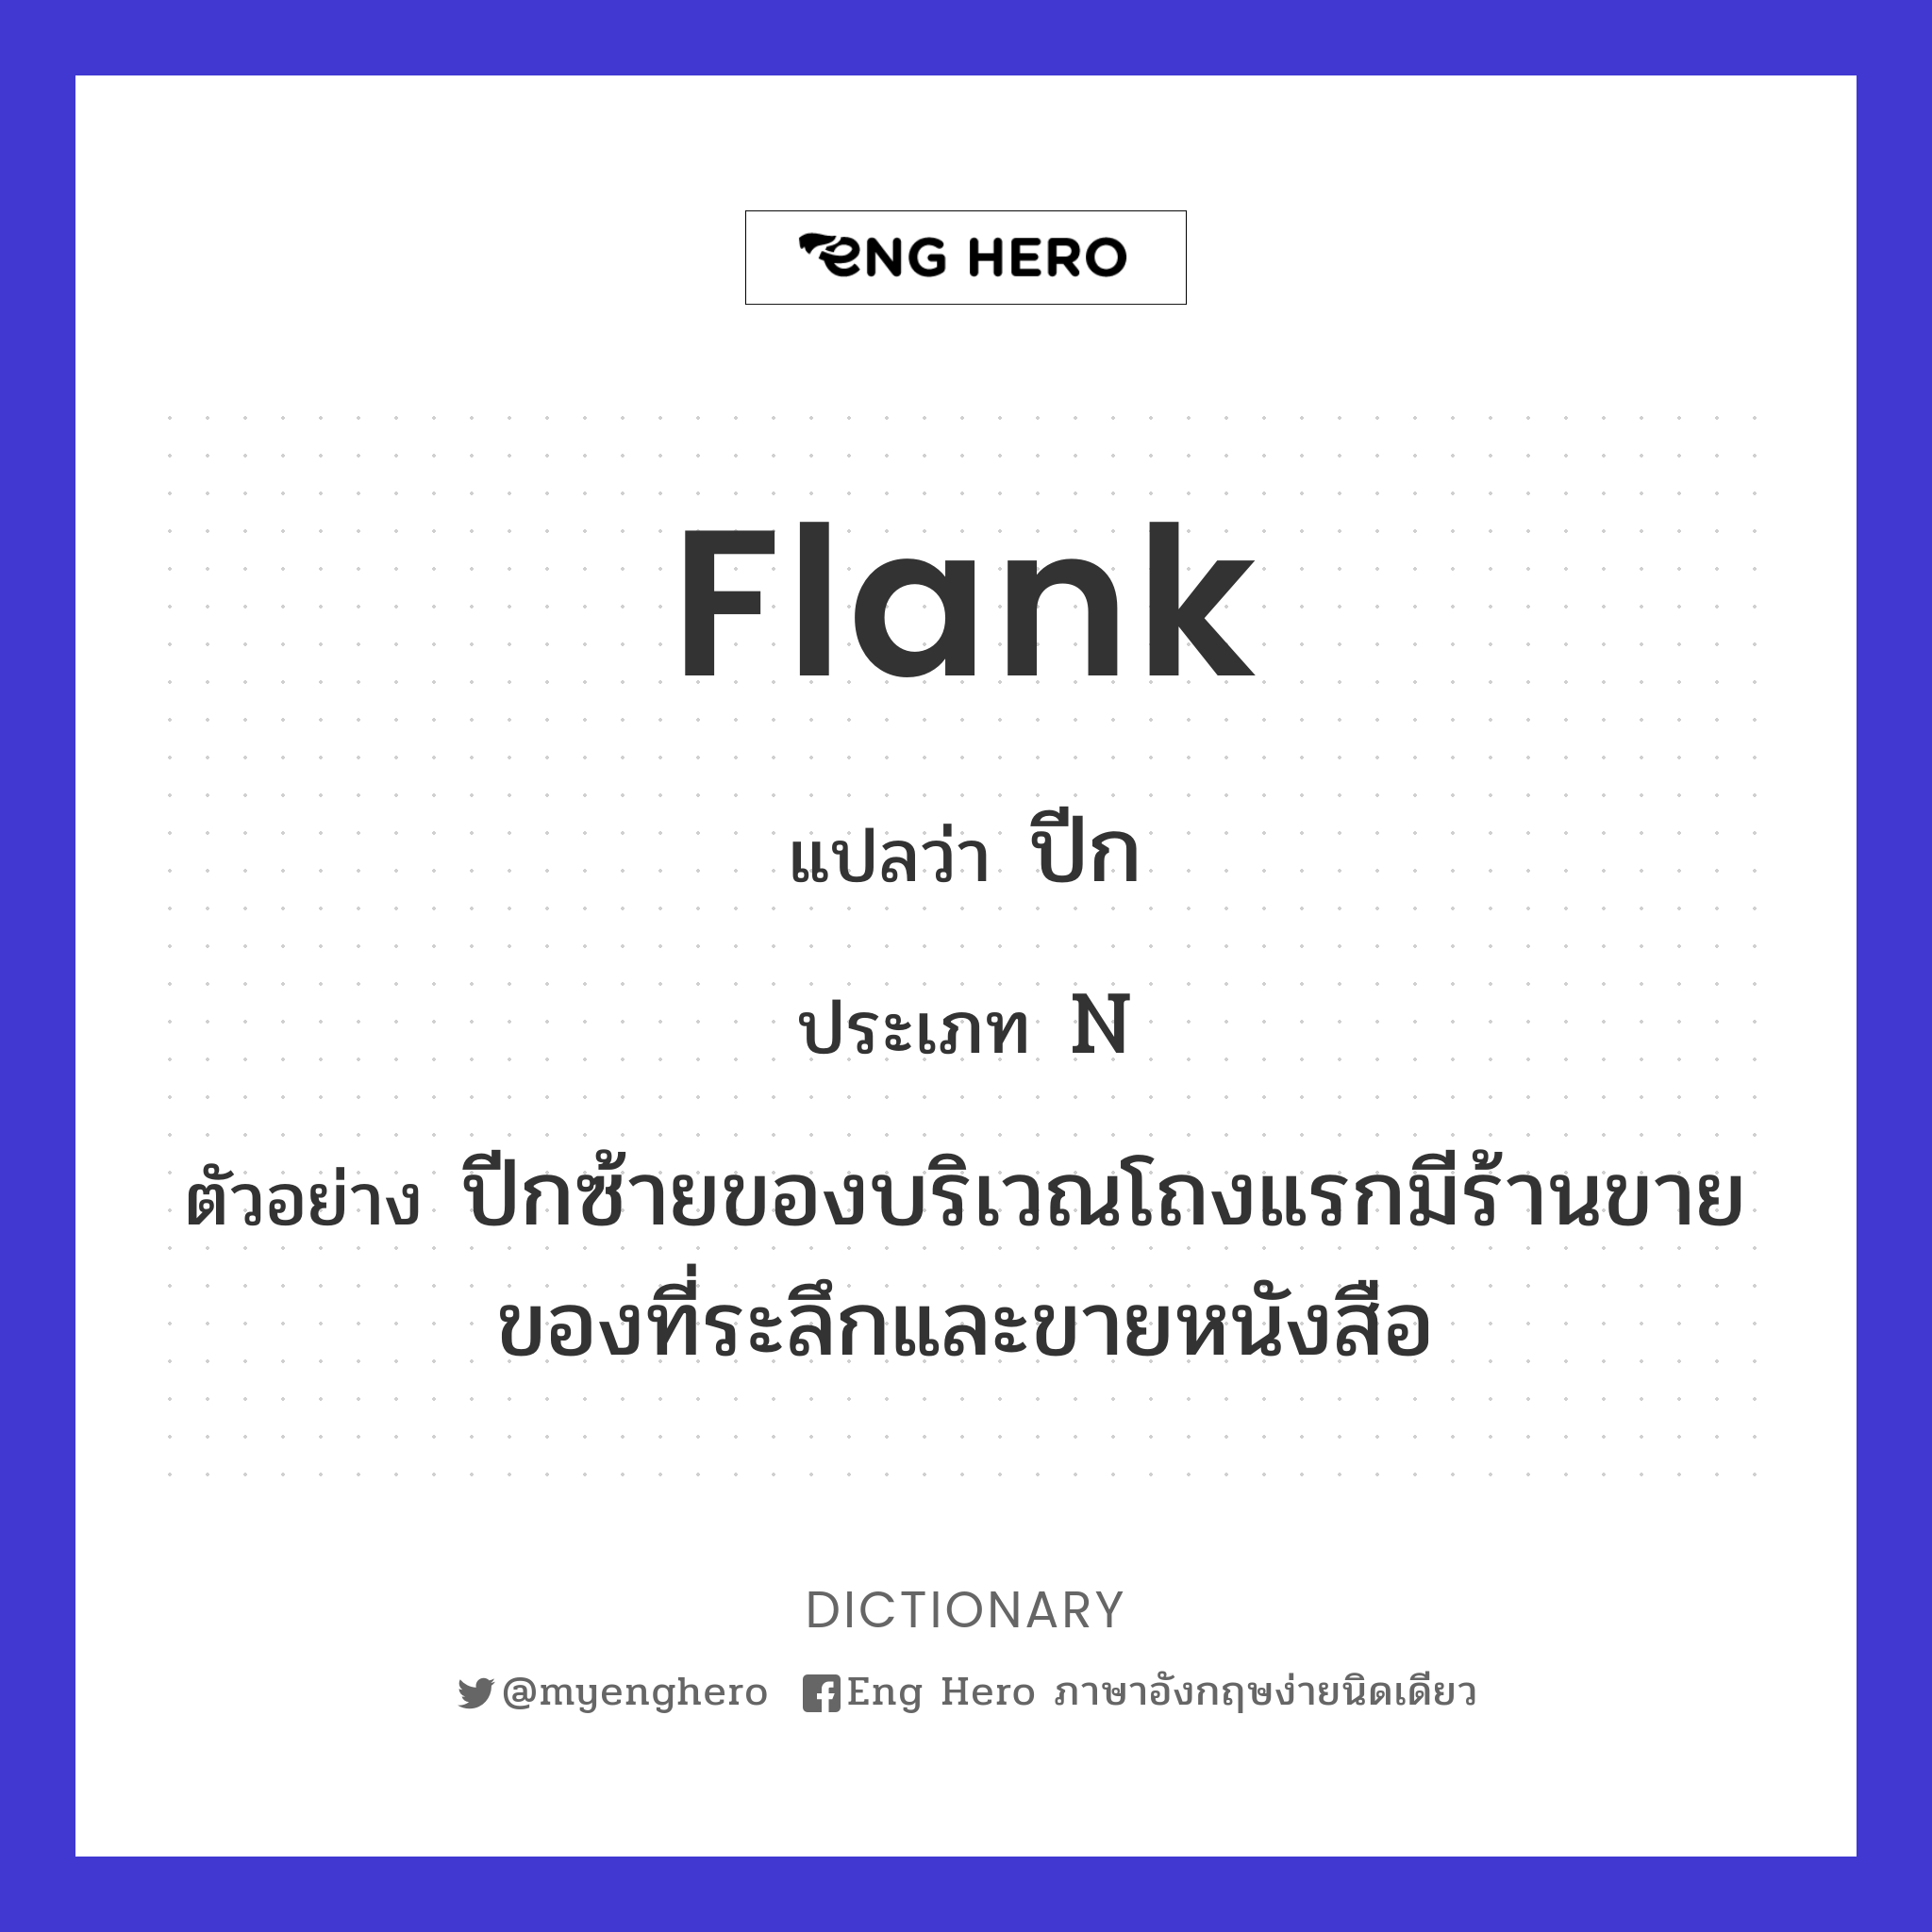 flank